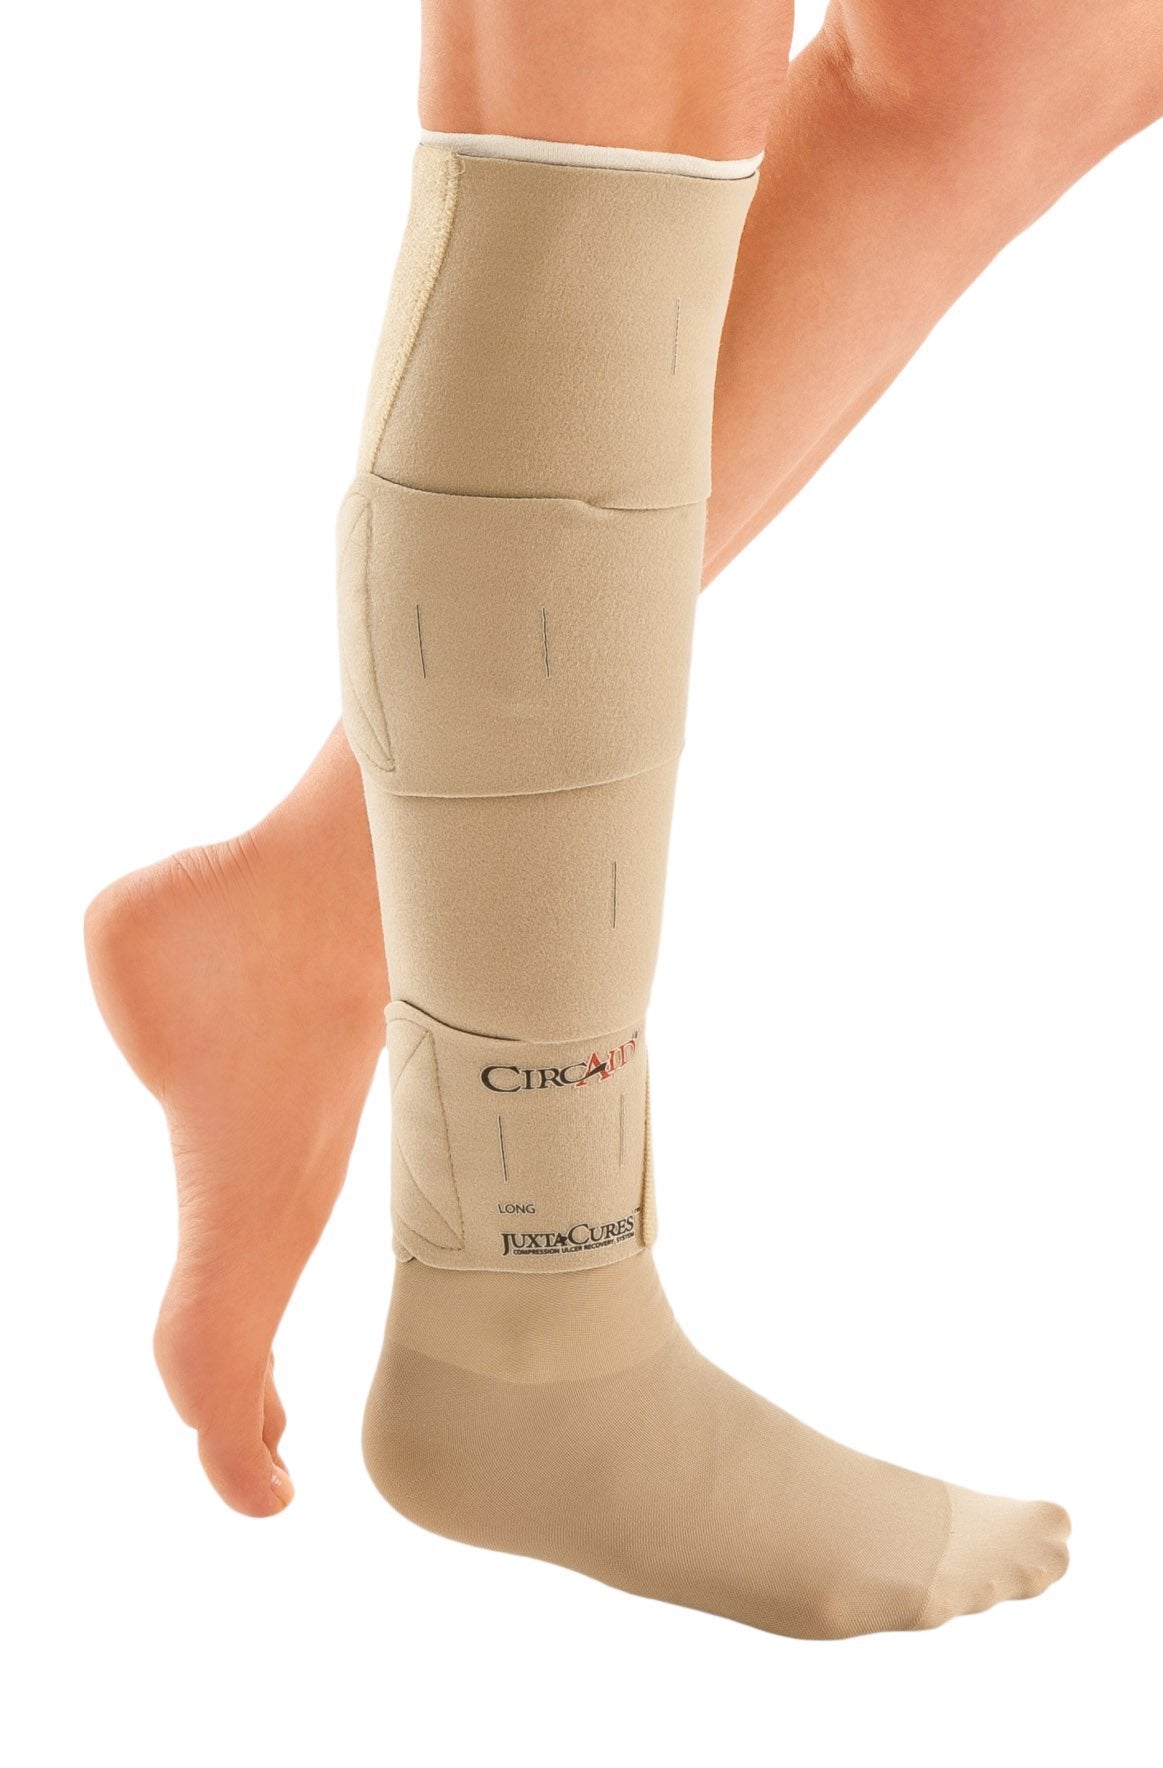 CircAid Juxta-Fit Interlocking Ankle Foot Wrap - Large 